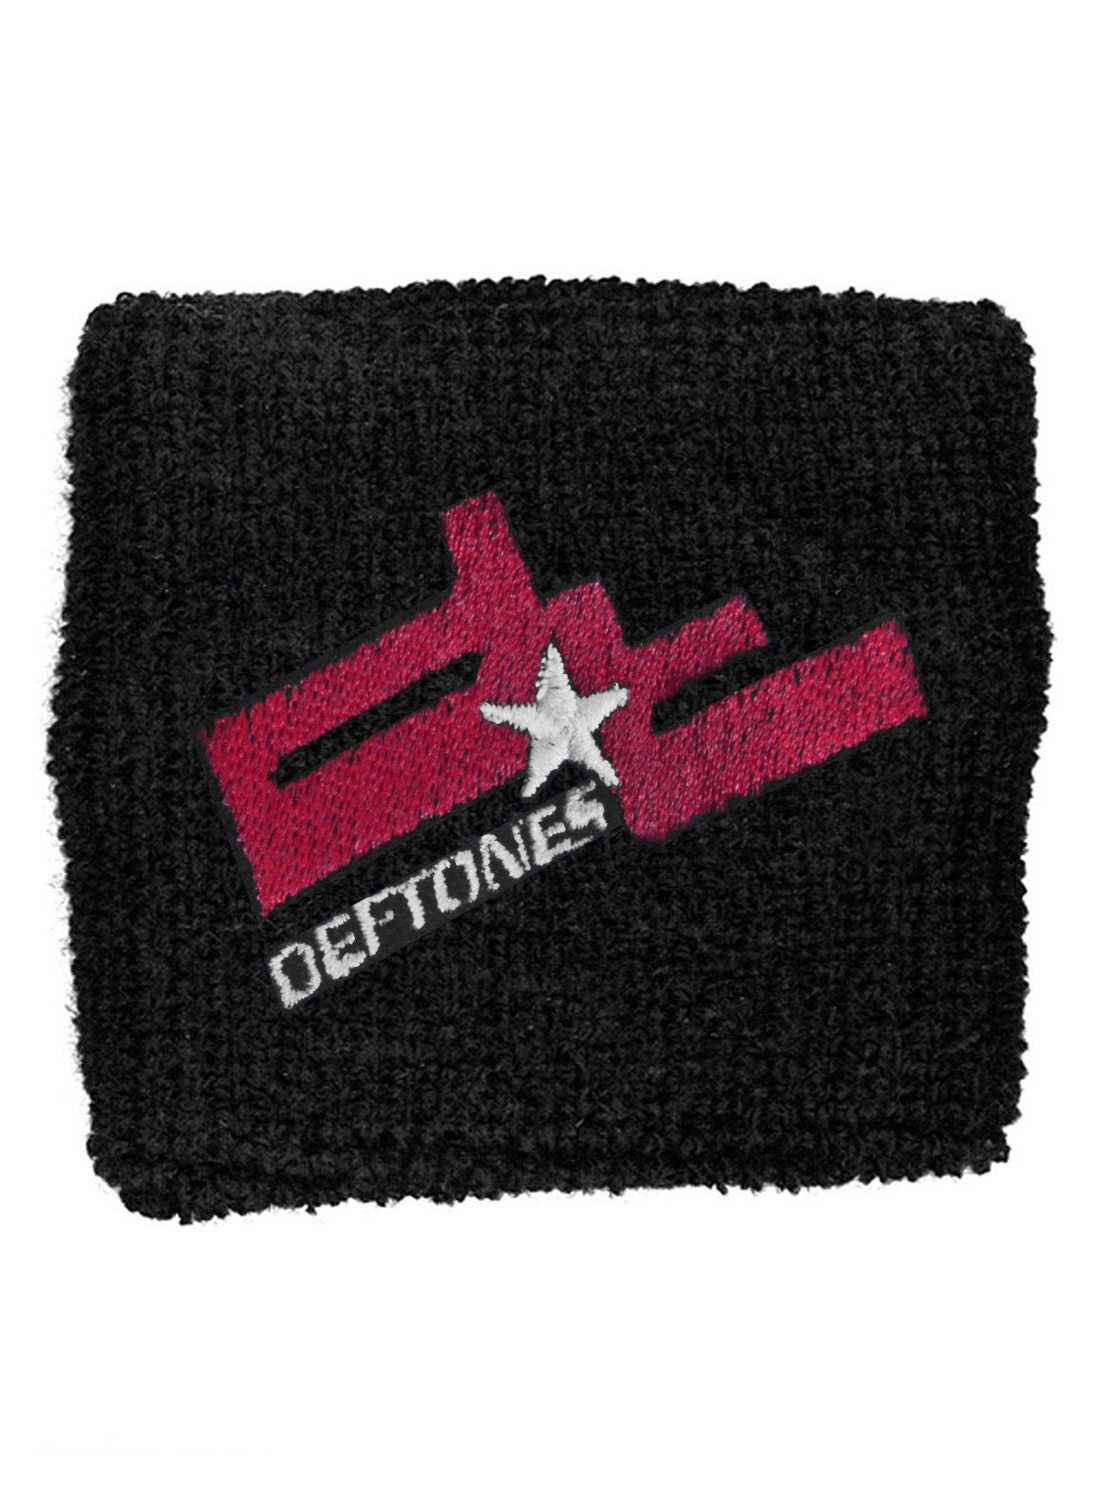 Deftones Embroidered Sweatband